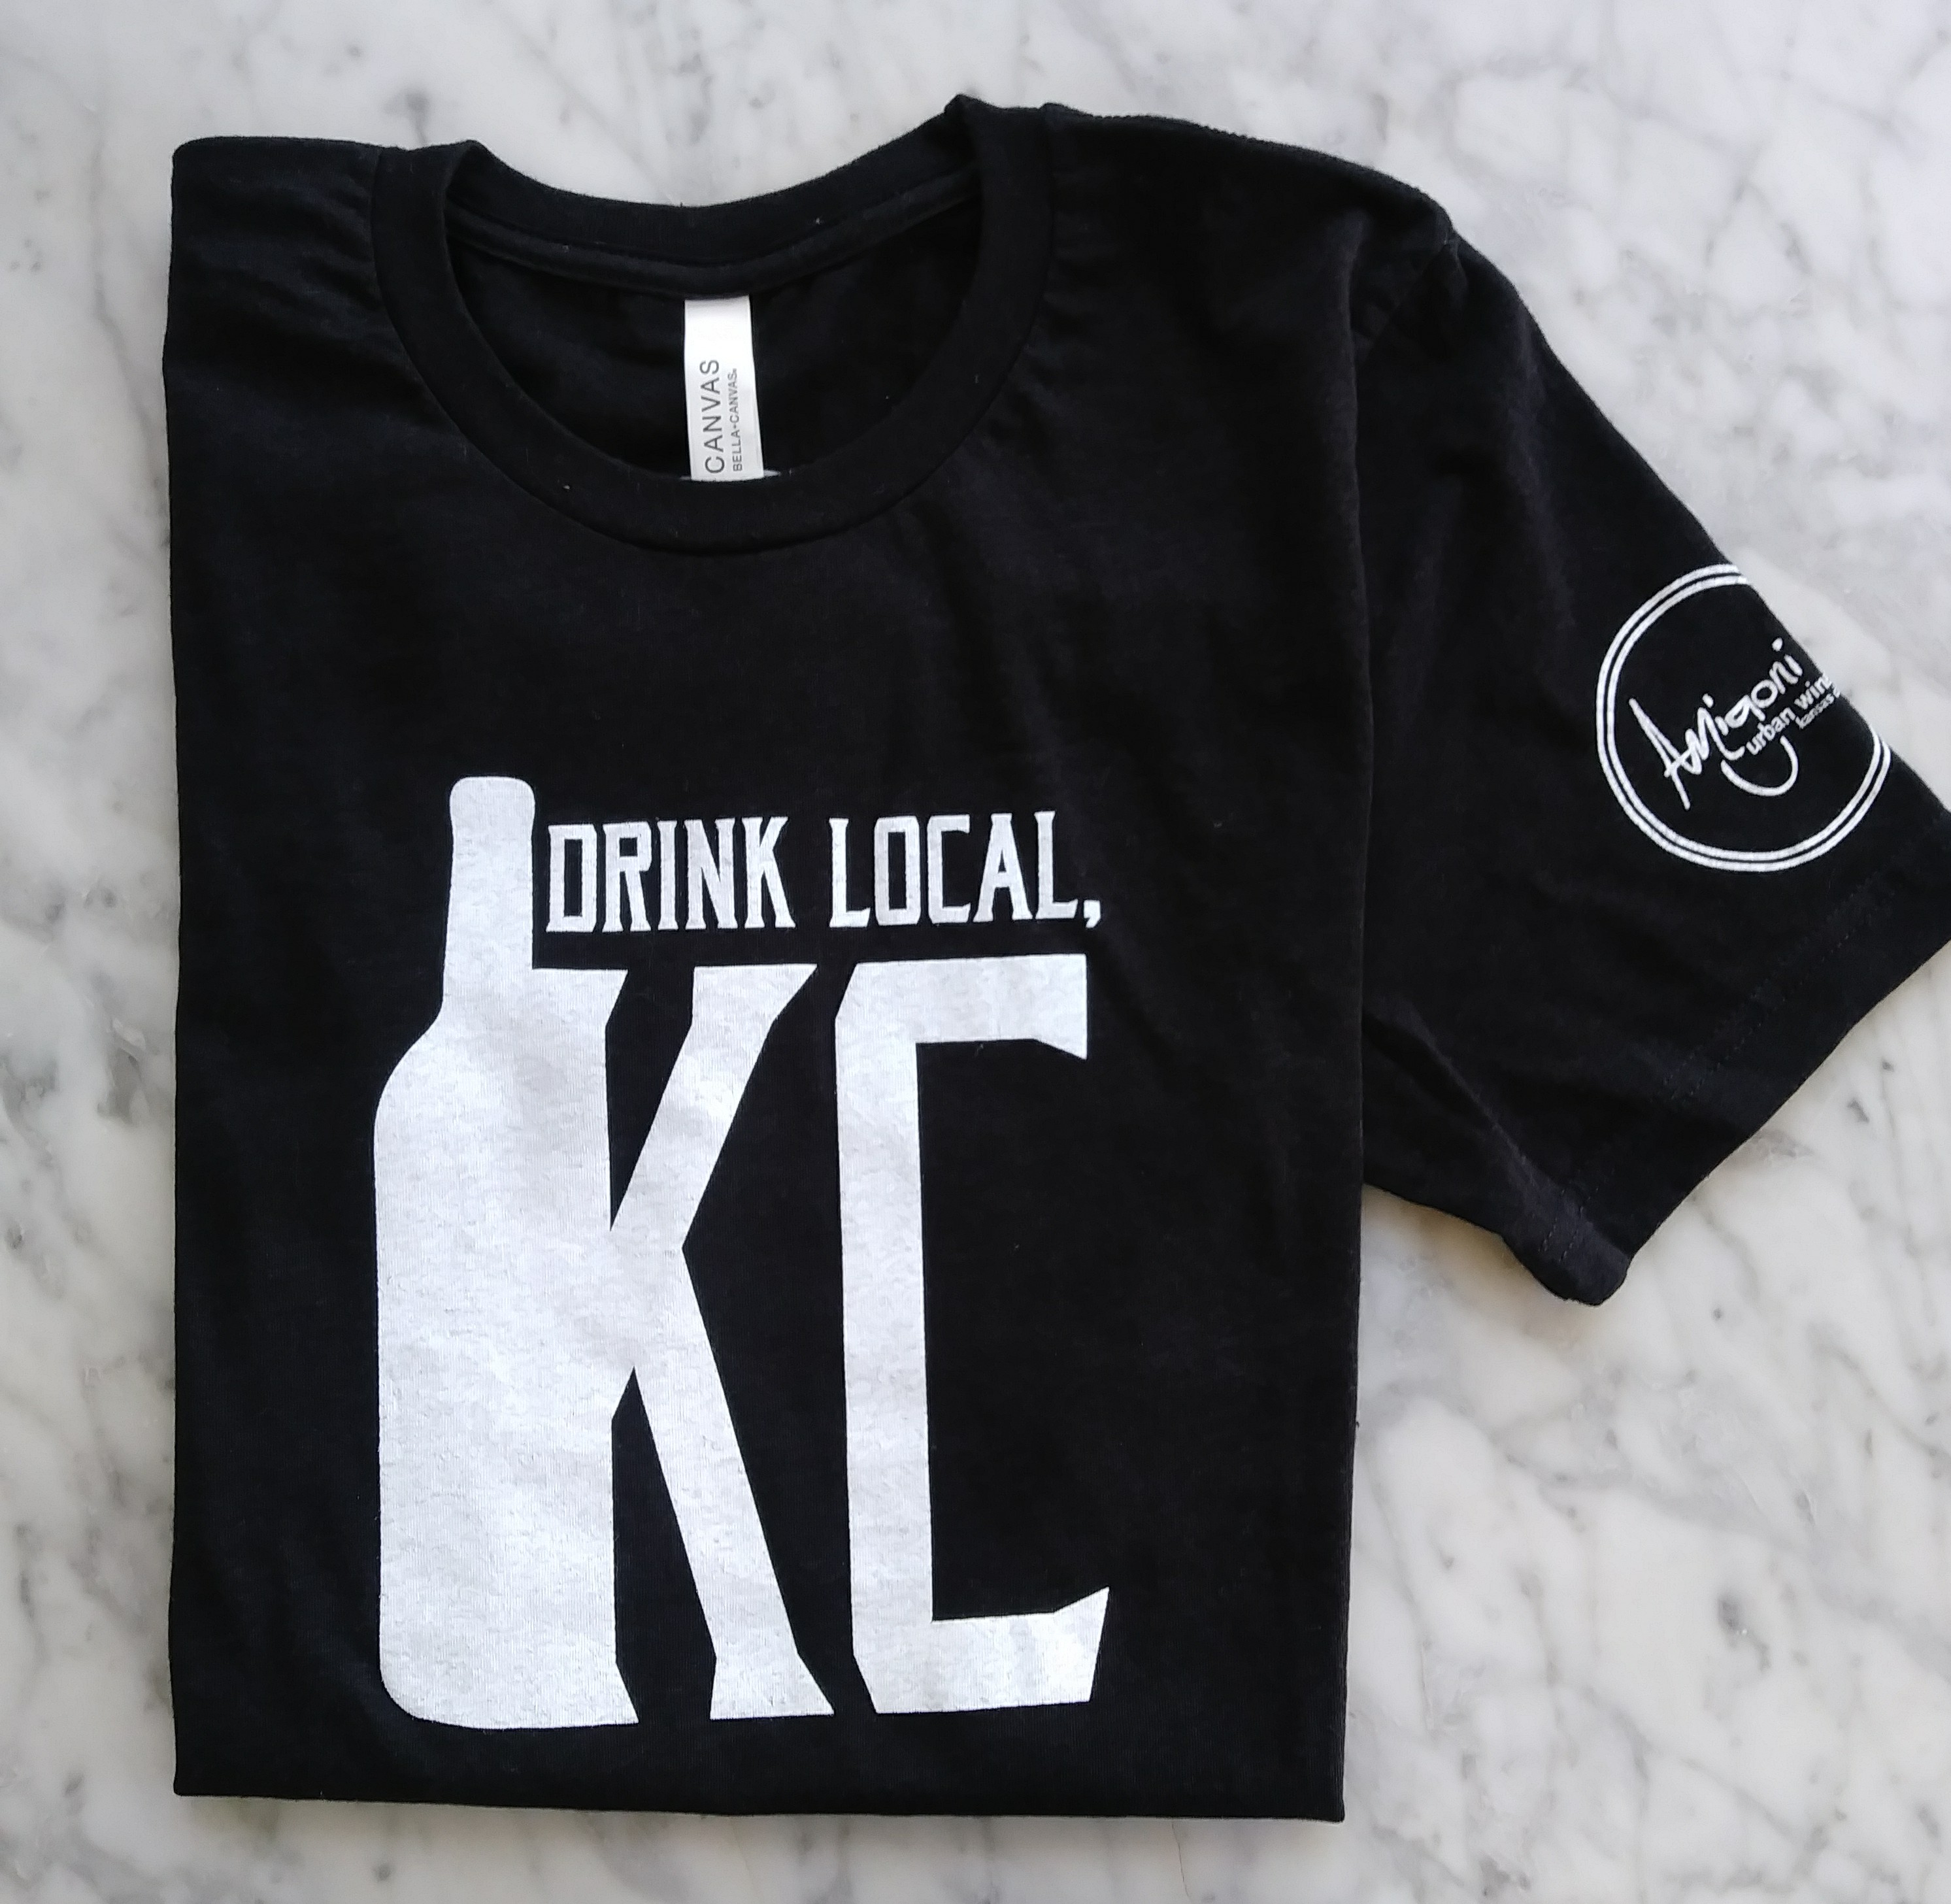 Product Image for Drink Local KC Bottle Shirt, Black 